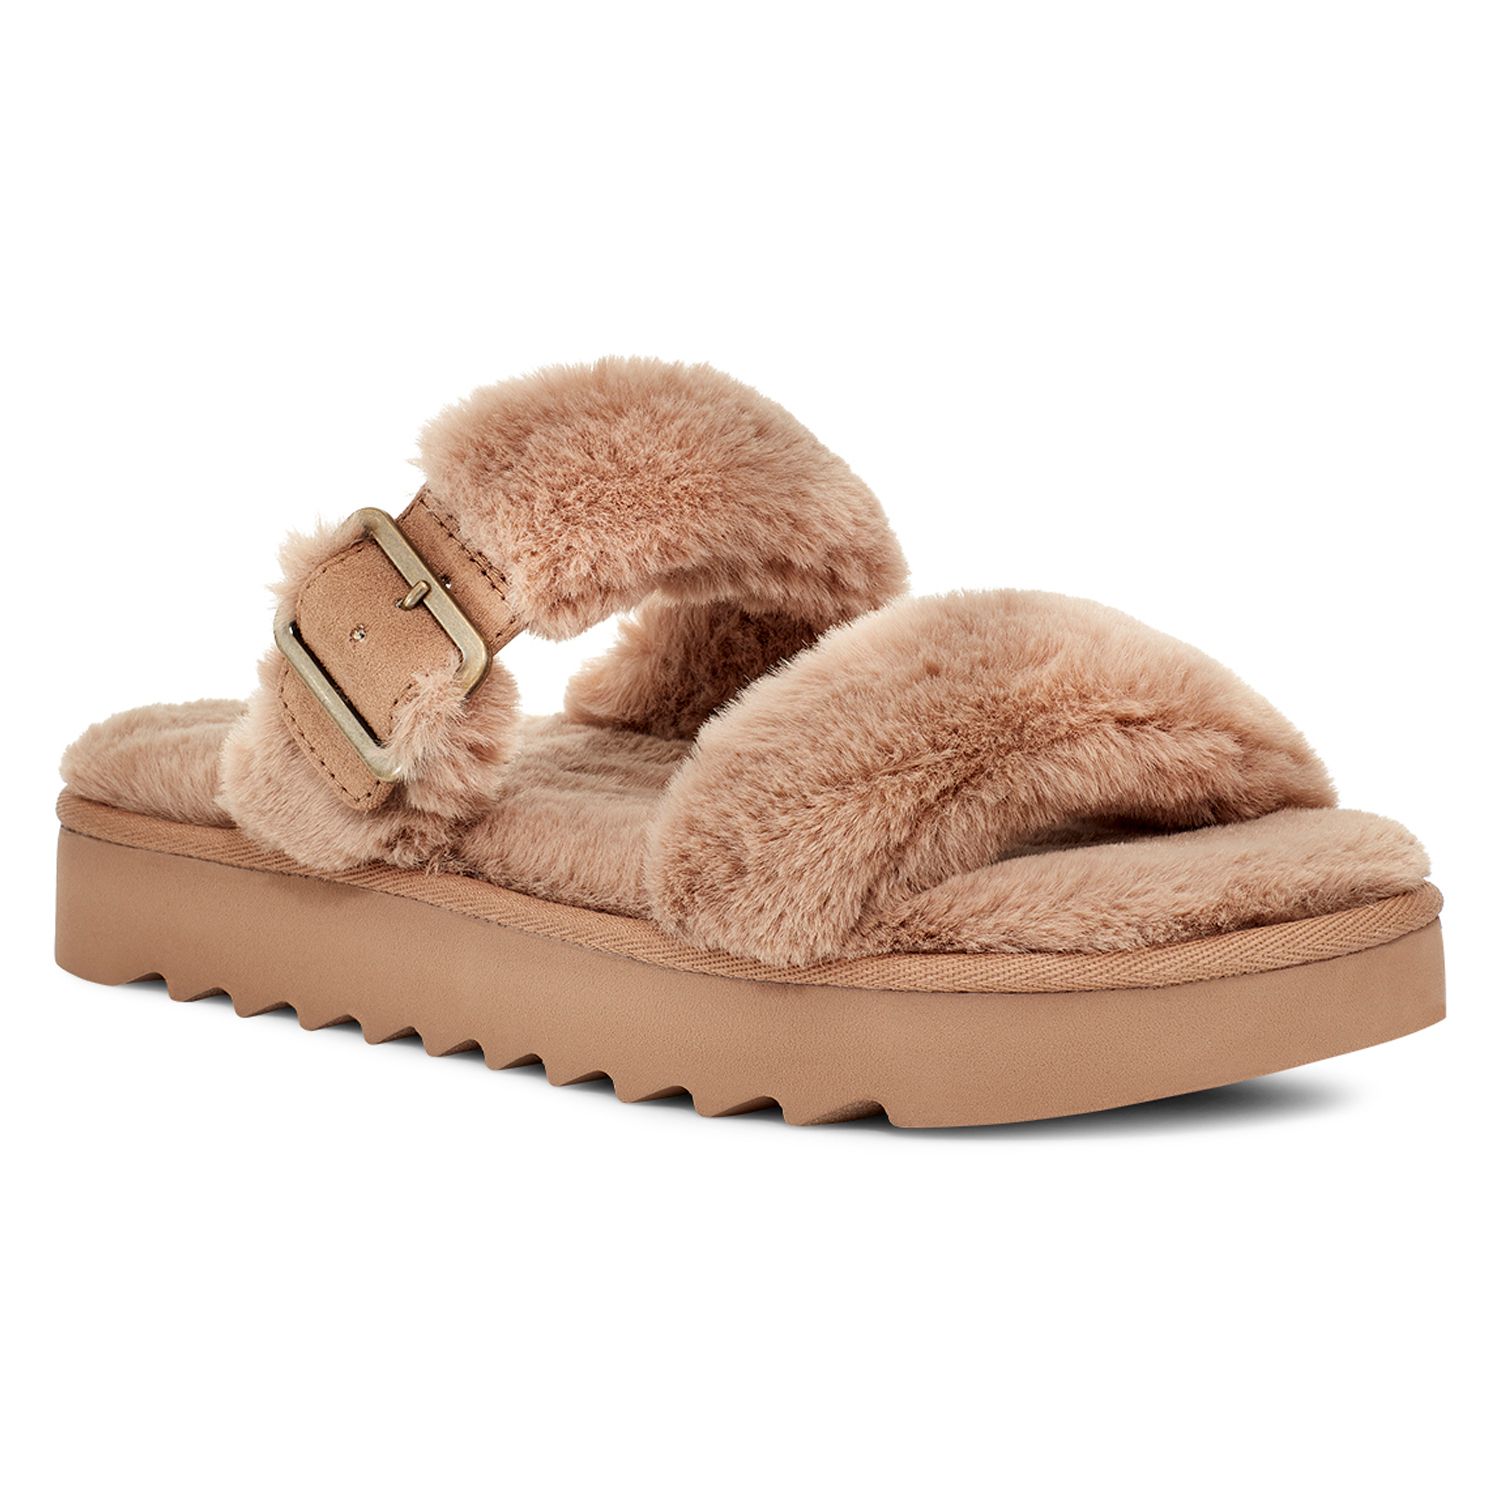 Ugg Women's Sandals Flash Sales, 56% OFF | www.hcb.cat